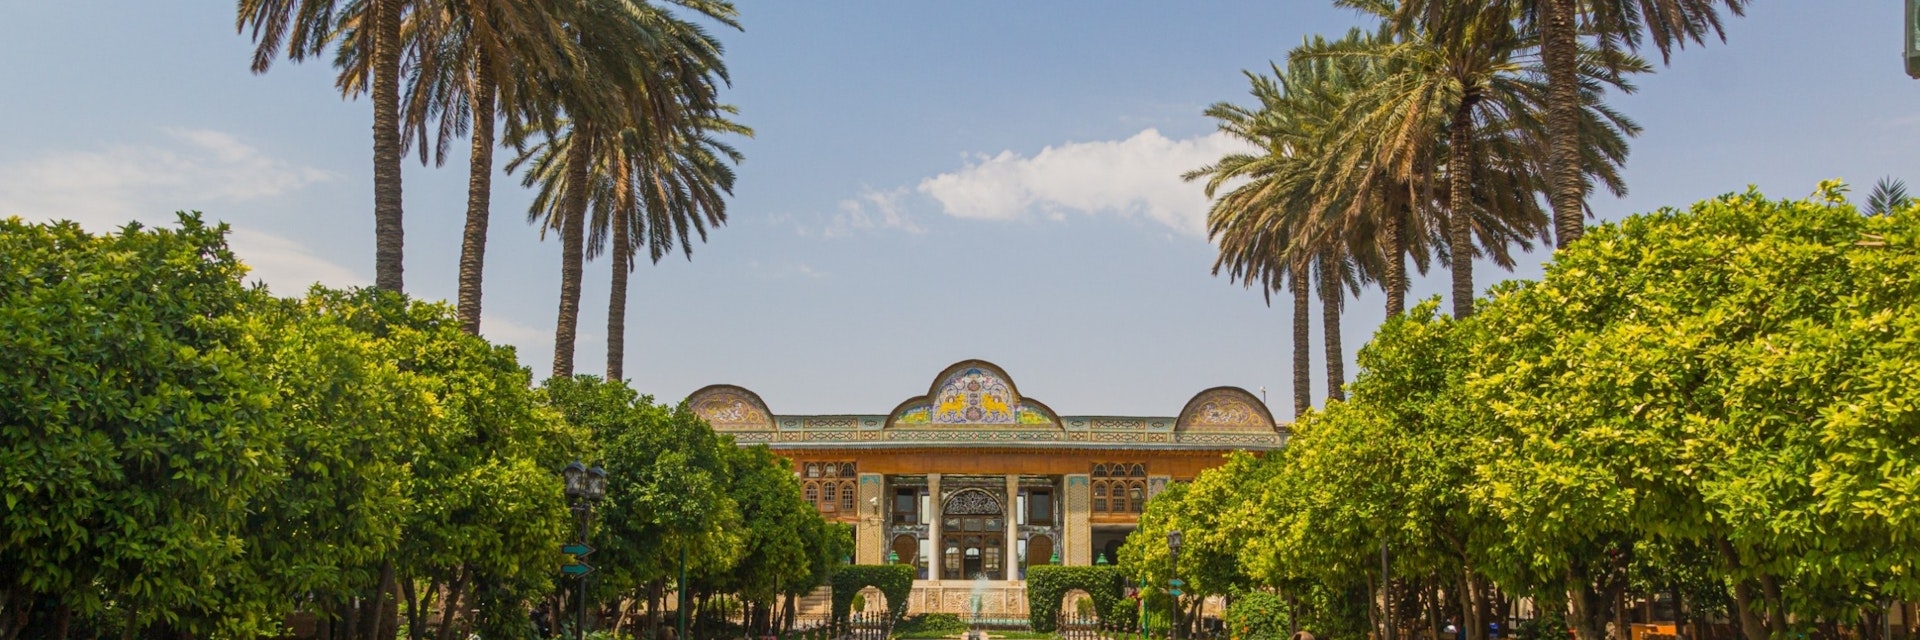 Naranjestan garden with Qavam House in Shiraz, Iran; Shutterstock ID 2154407523; purchase_order: 65050; job: ; client: ; other:
2154407523